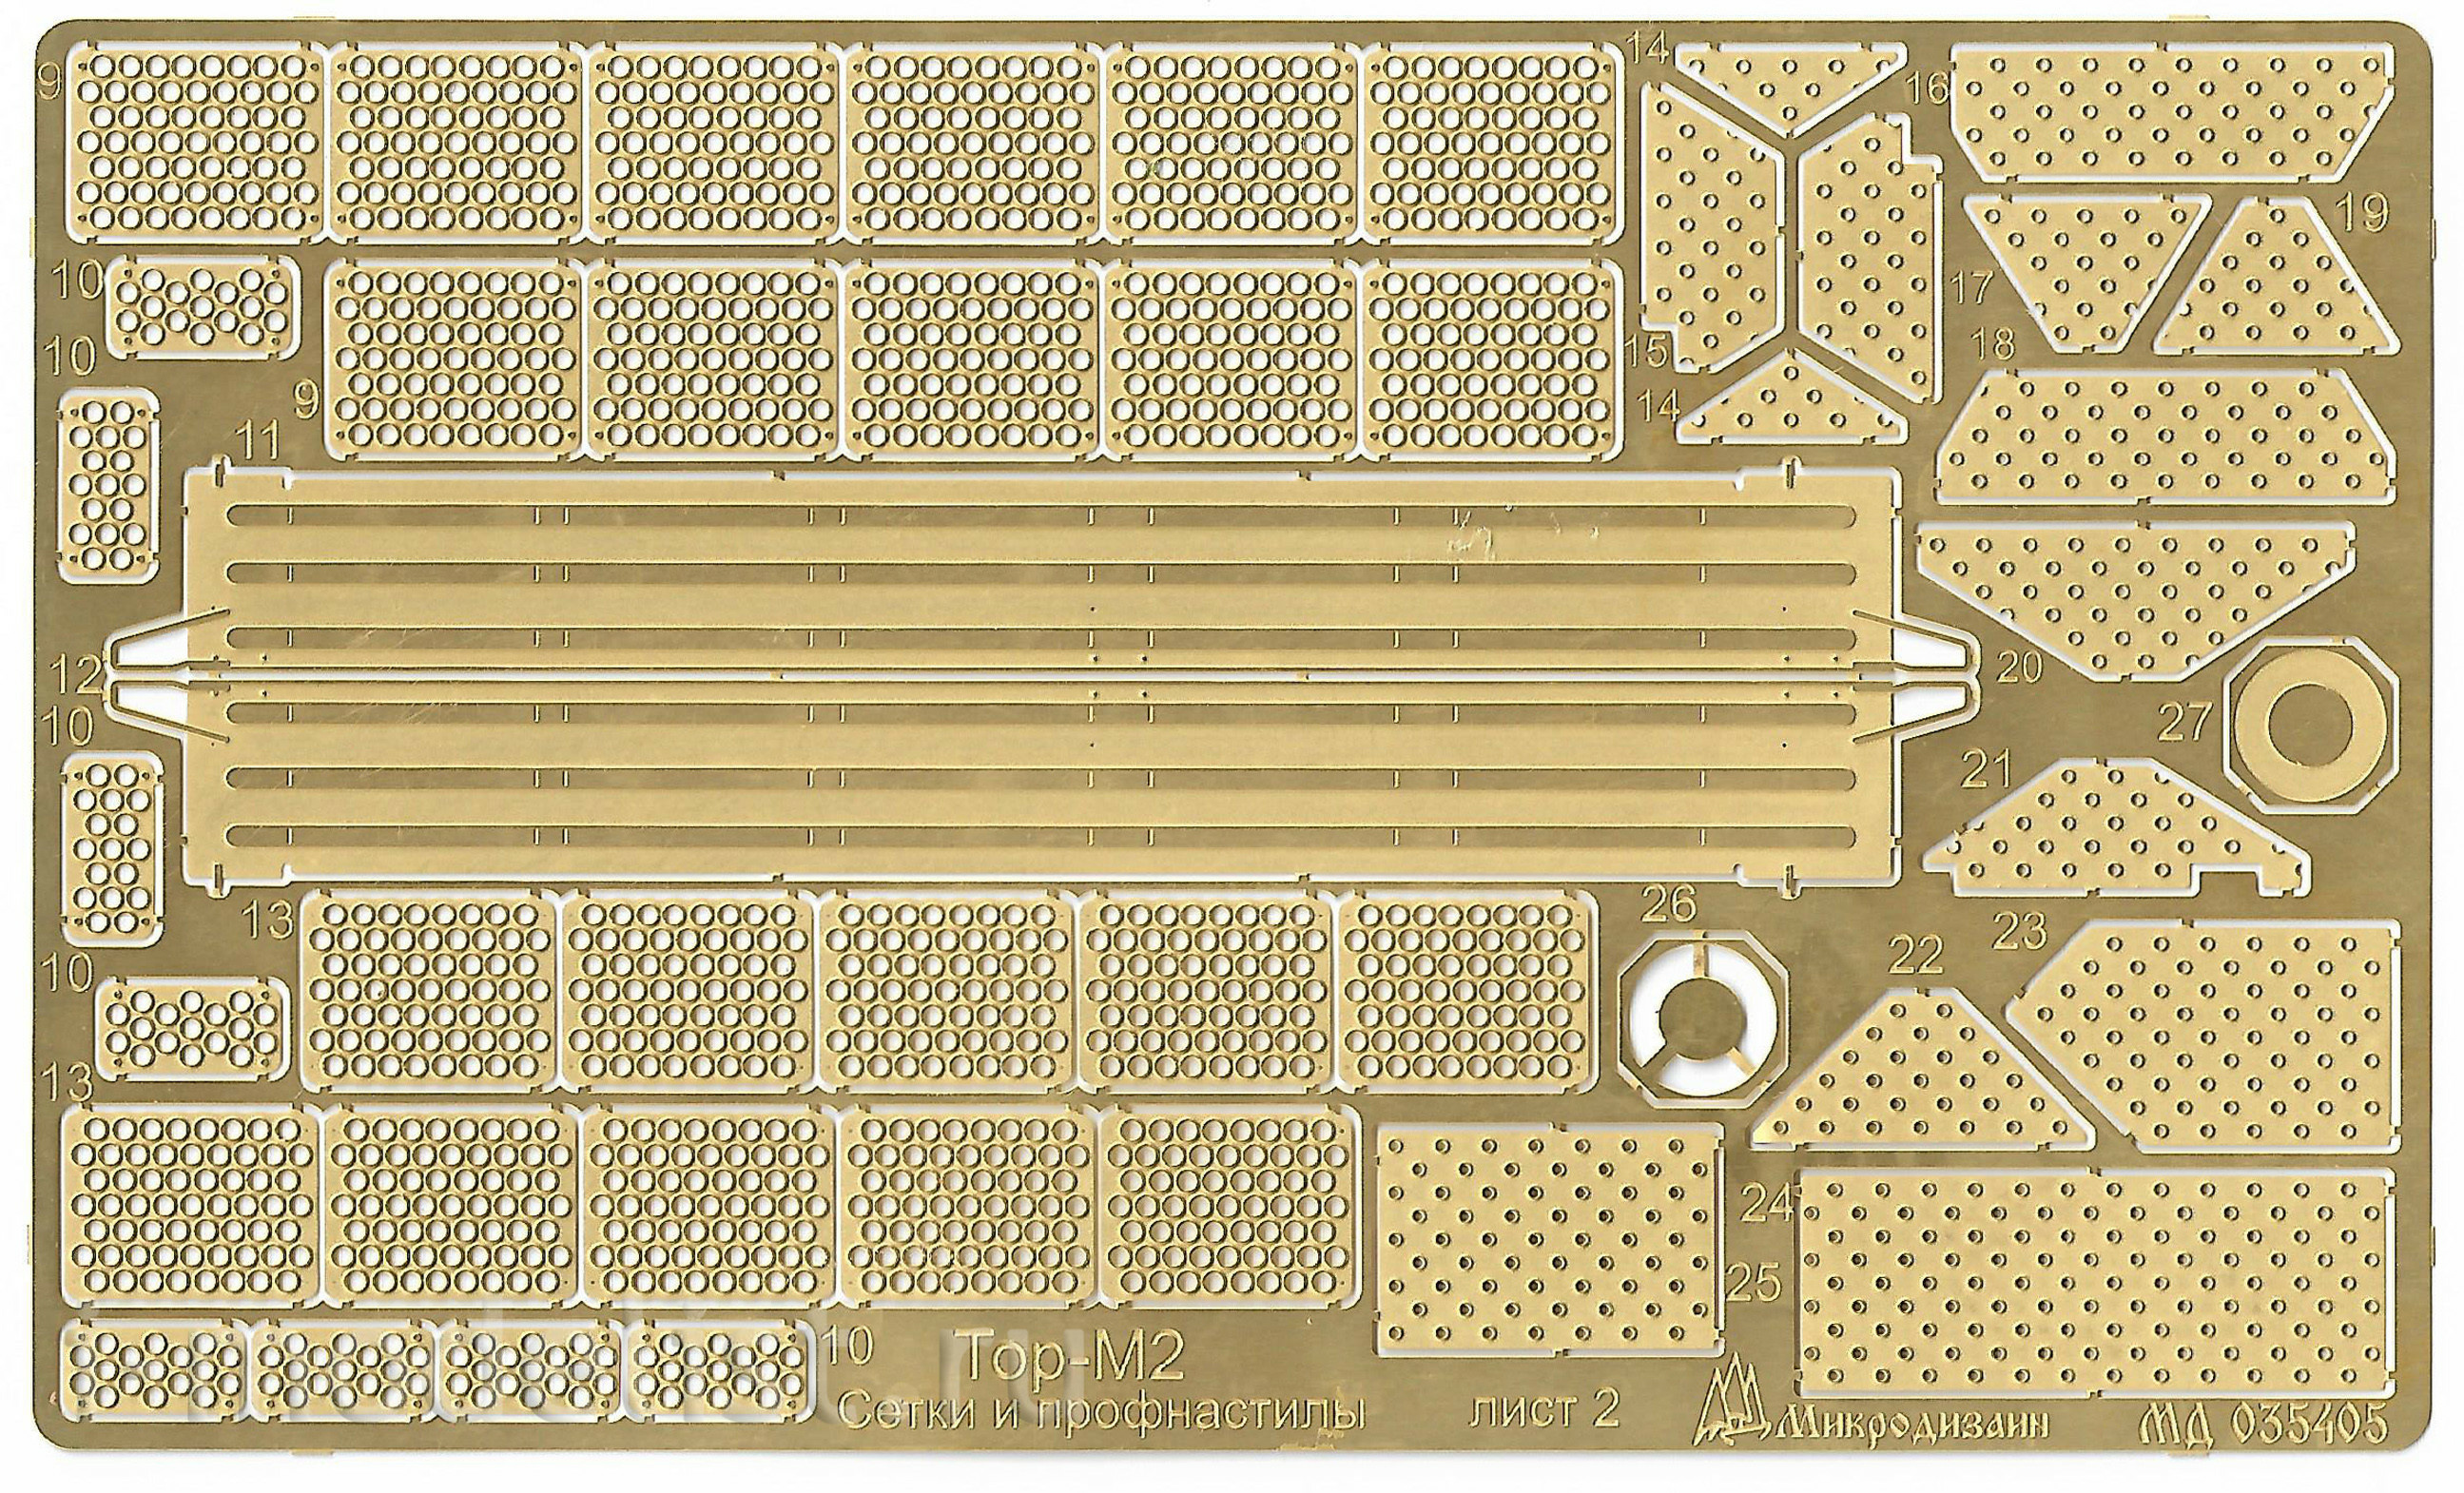 035405 Microdesign 1/35 9K332 TOR-M2 (Zvezda) profiled flooring and mesh